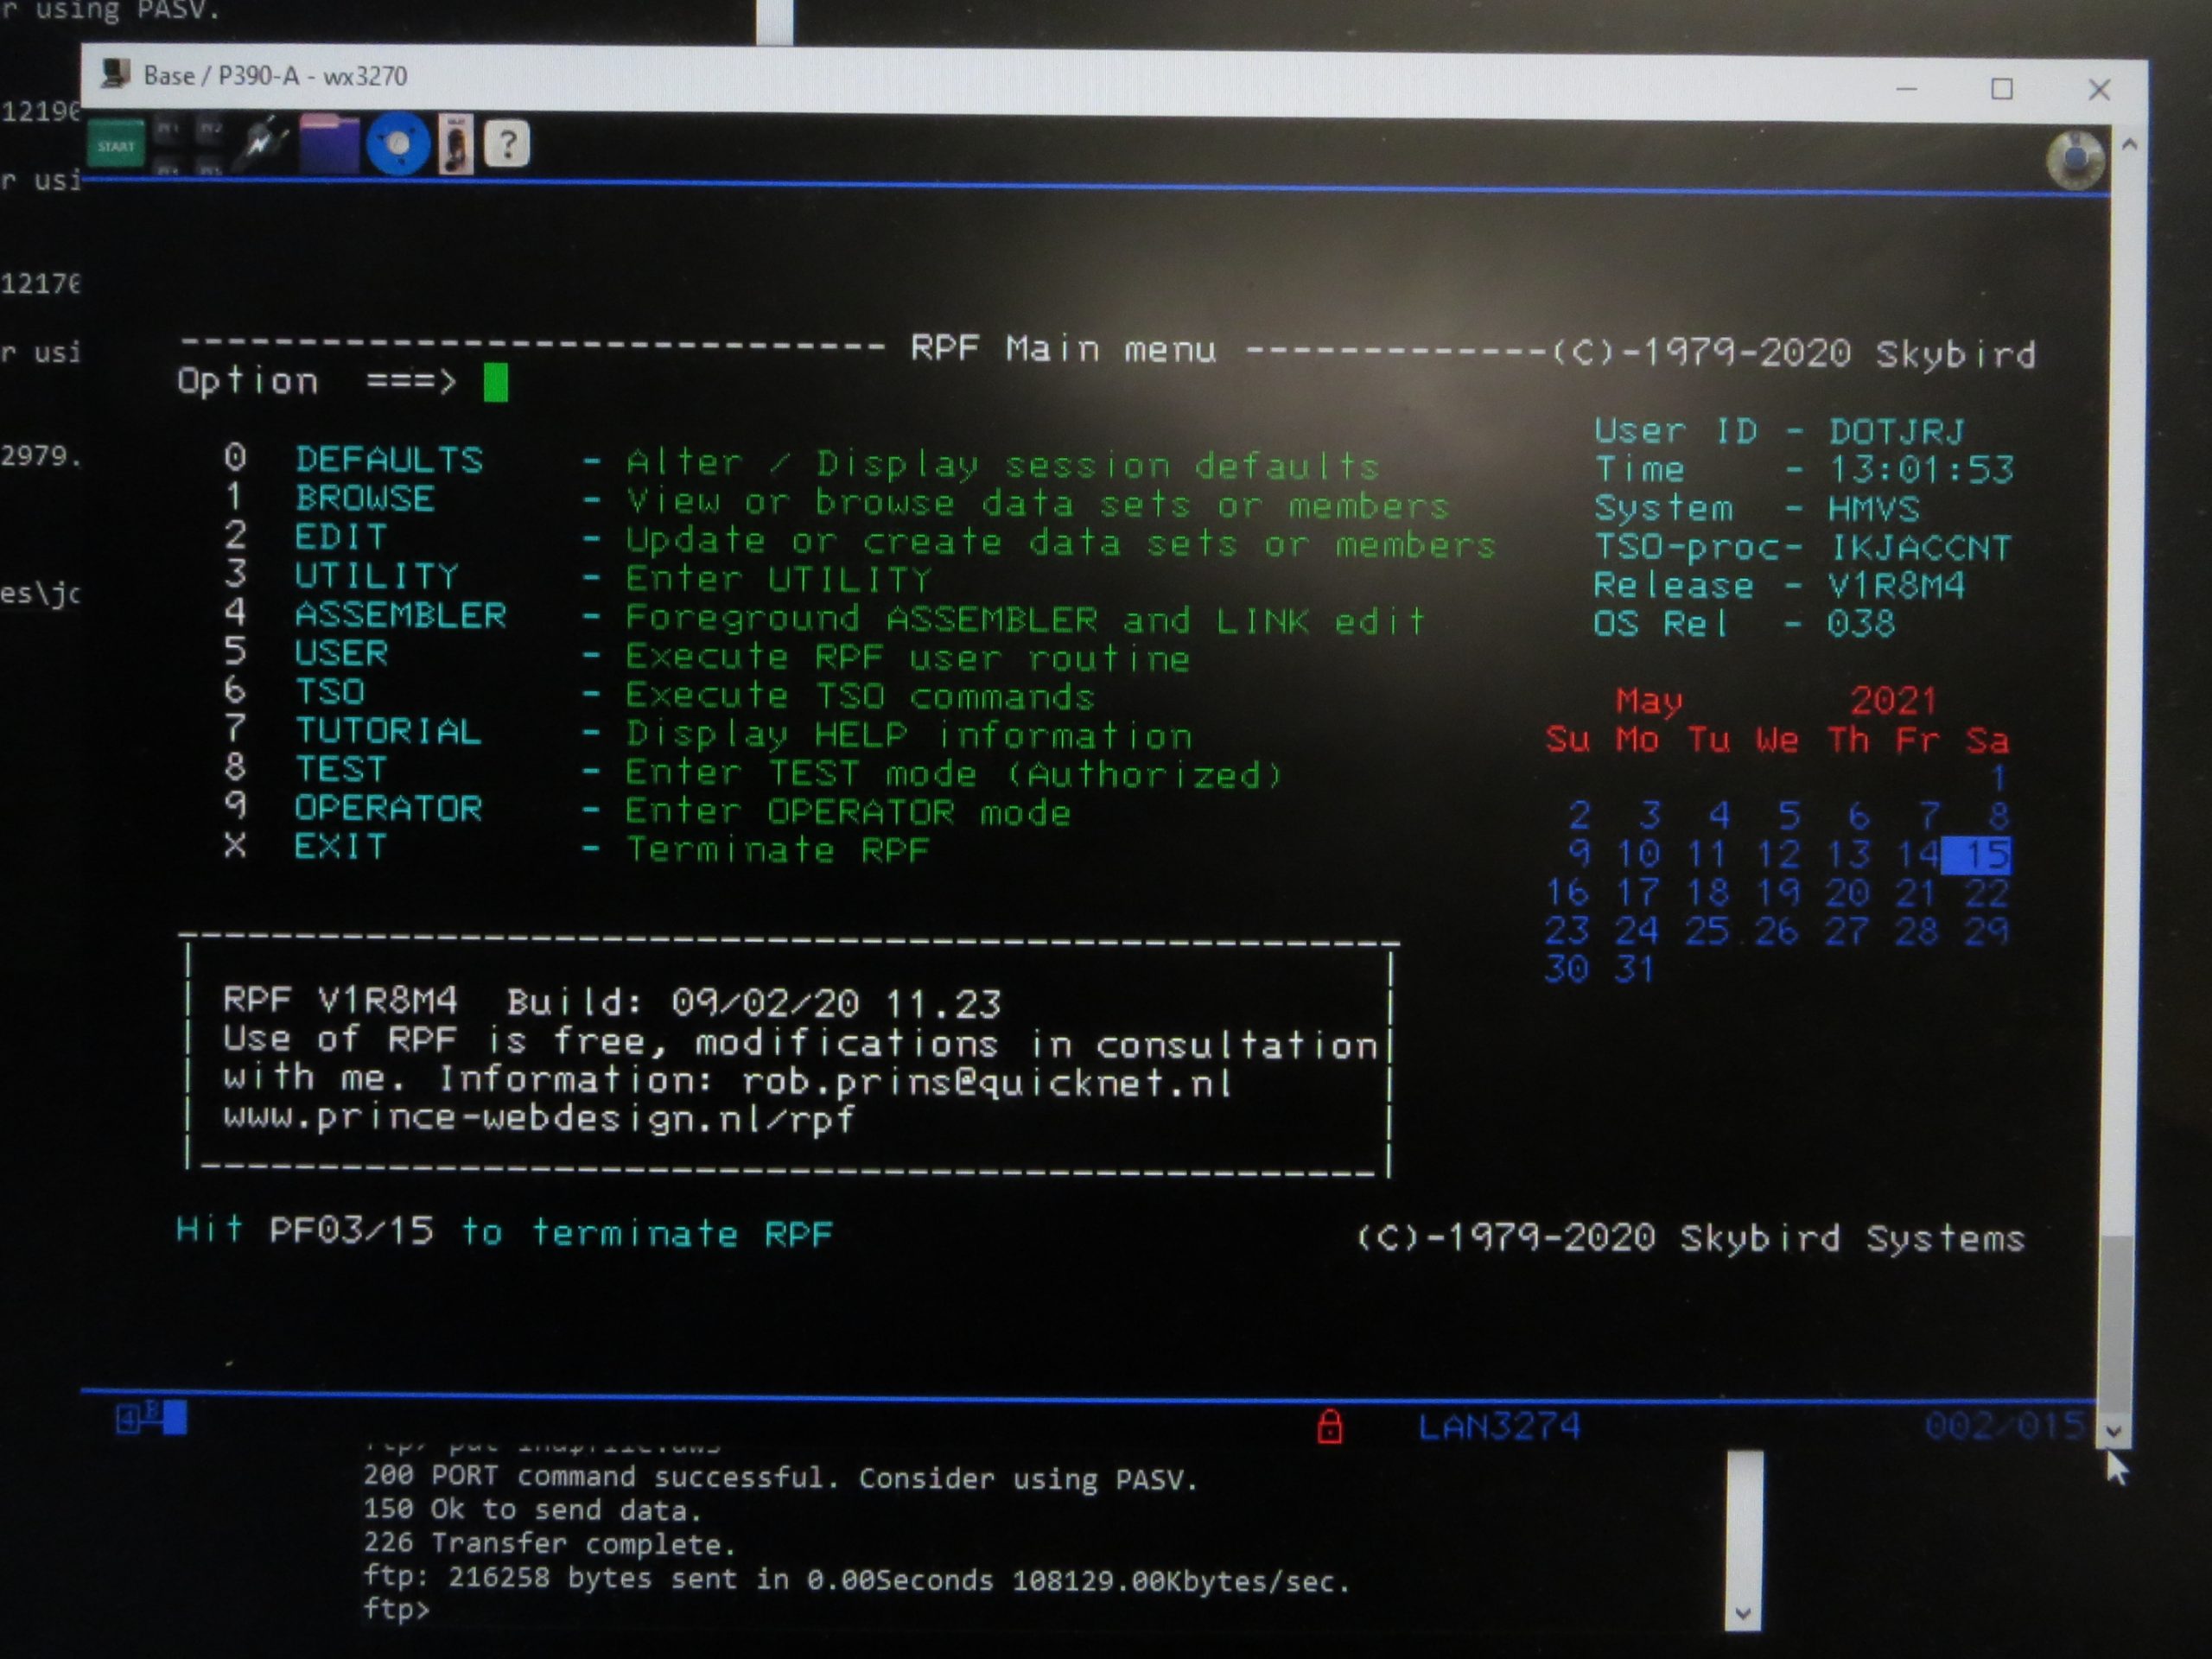 AMD 1.33 GHz Athlon PC IBM P/390E MVS 3.8j TSO with RPF on Windows 10 PC